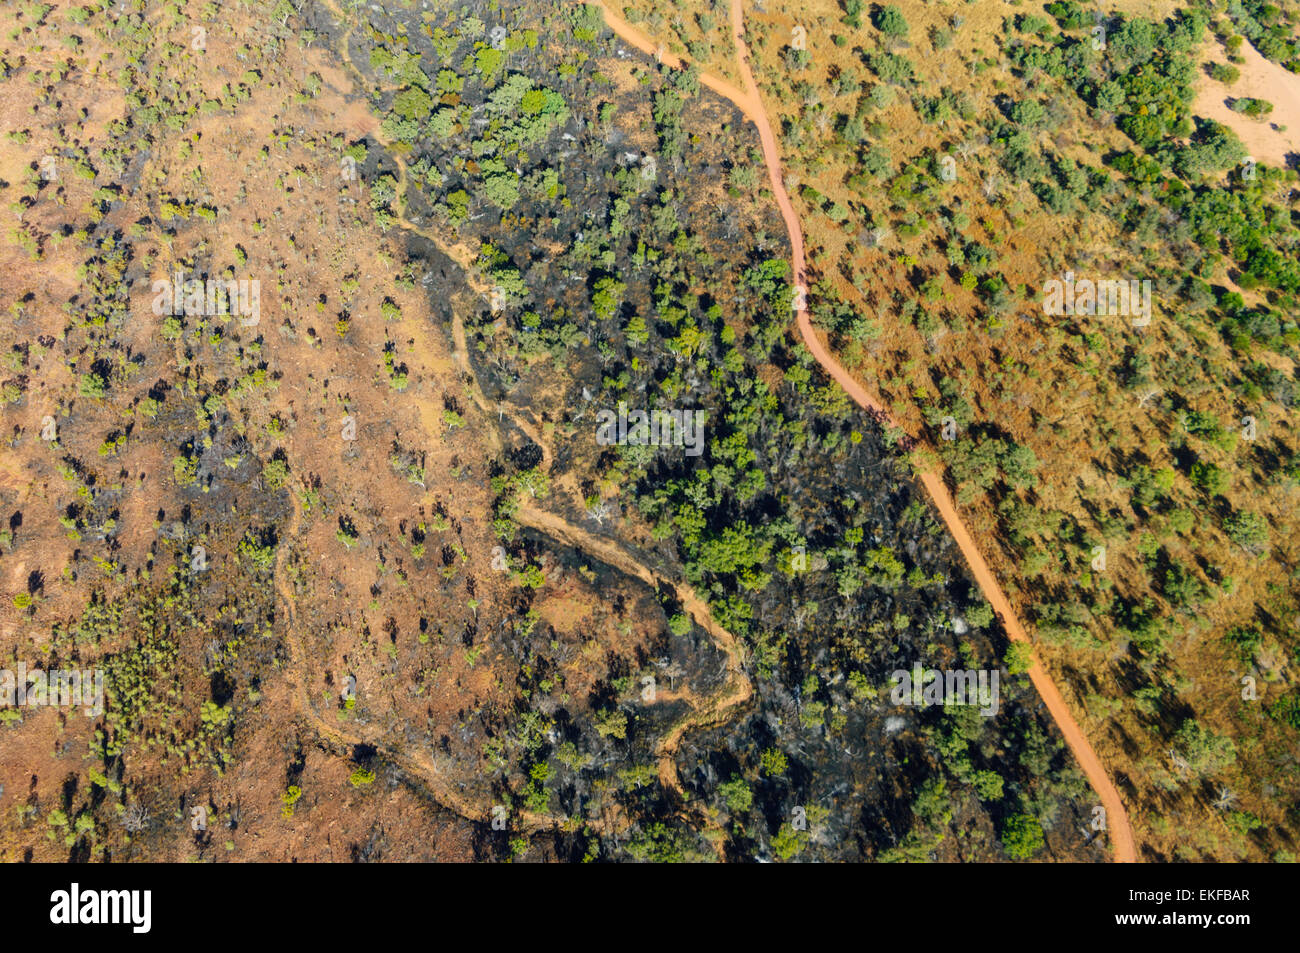 Aerial view of El Questro Wilderness Park, Kimberley Region, Western Australia, WA, Australia Stock Photo